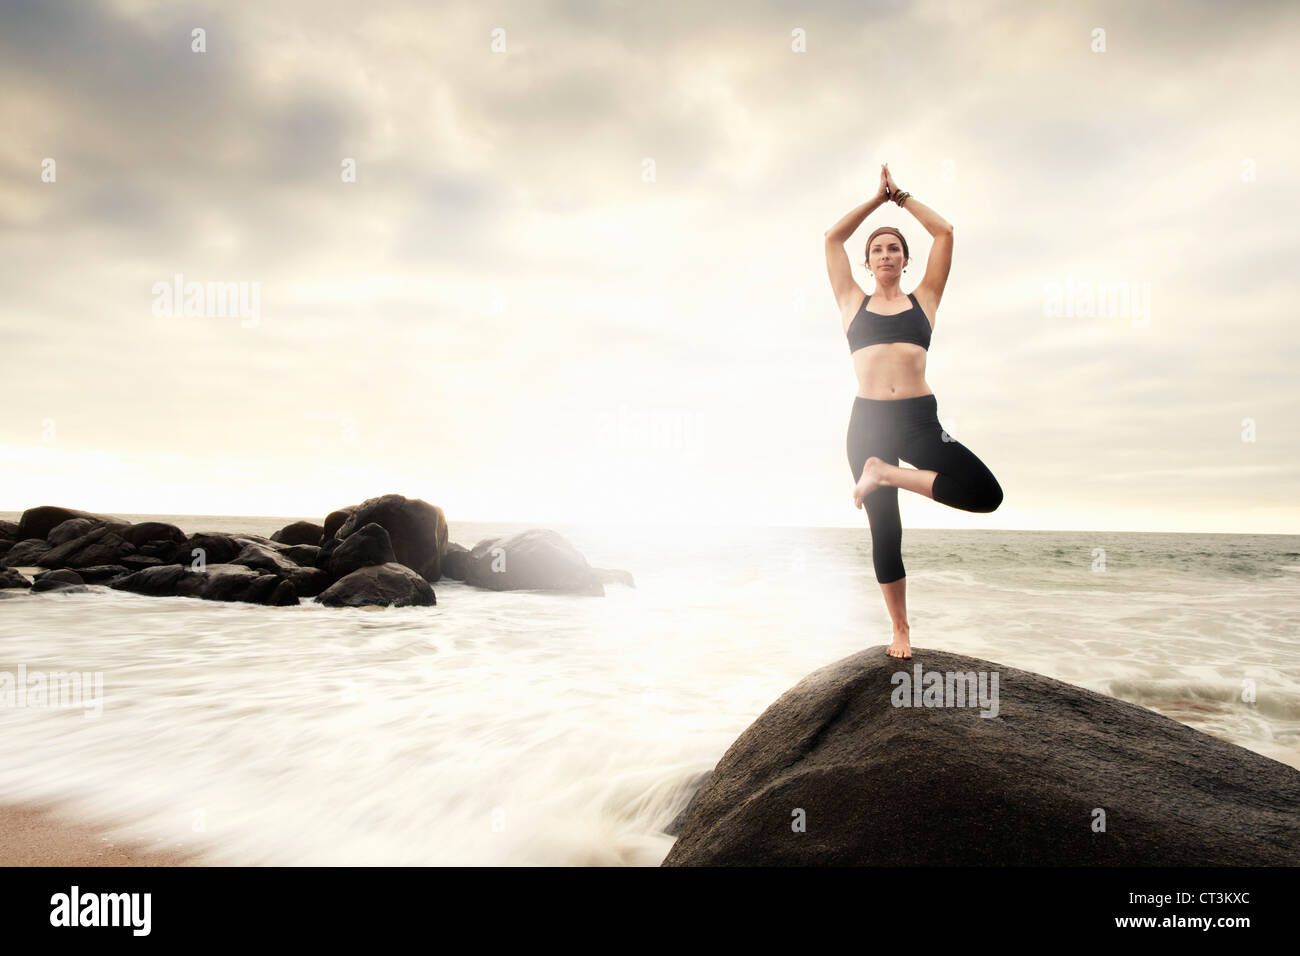 Woman practicing yoga on rocks on beach Stock Photo